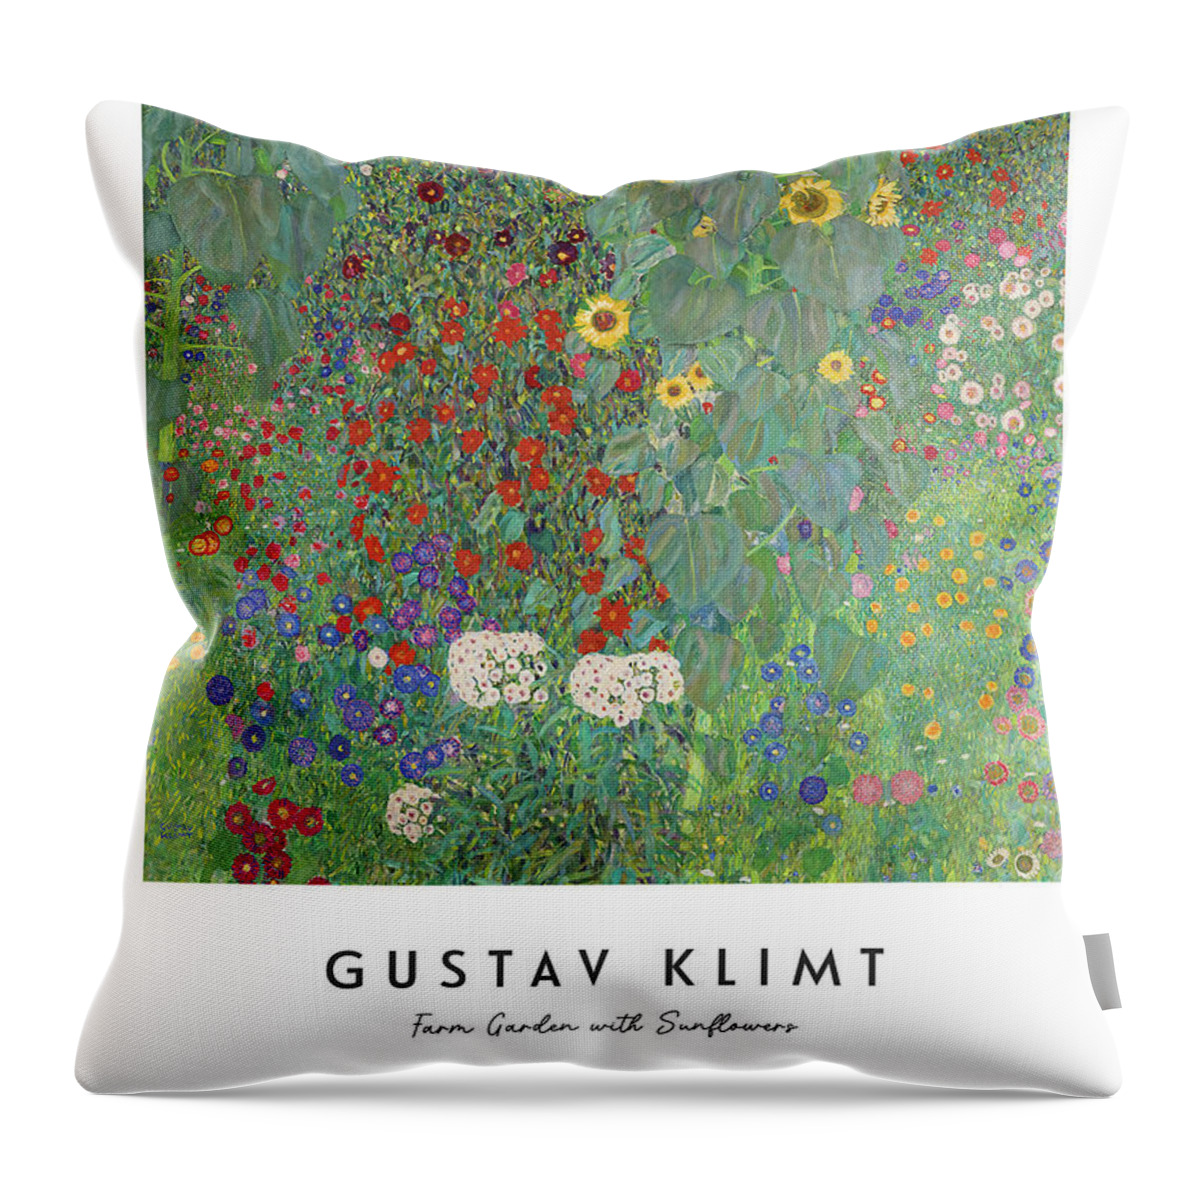 Gustav Klimt Throw Pillow featuring the painting Farm Garden with Sunflowers by Gustav Klimt